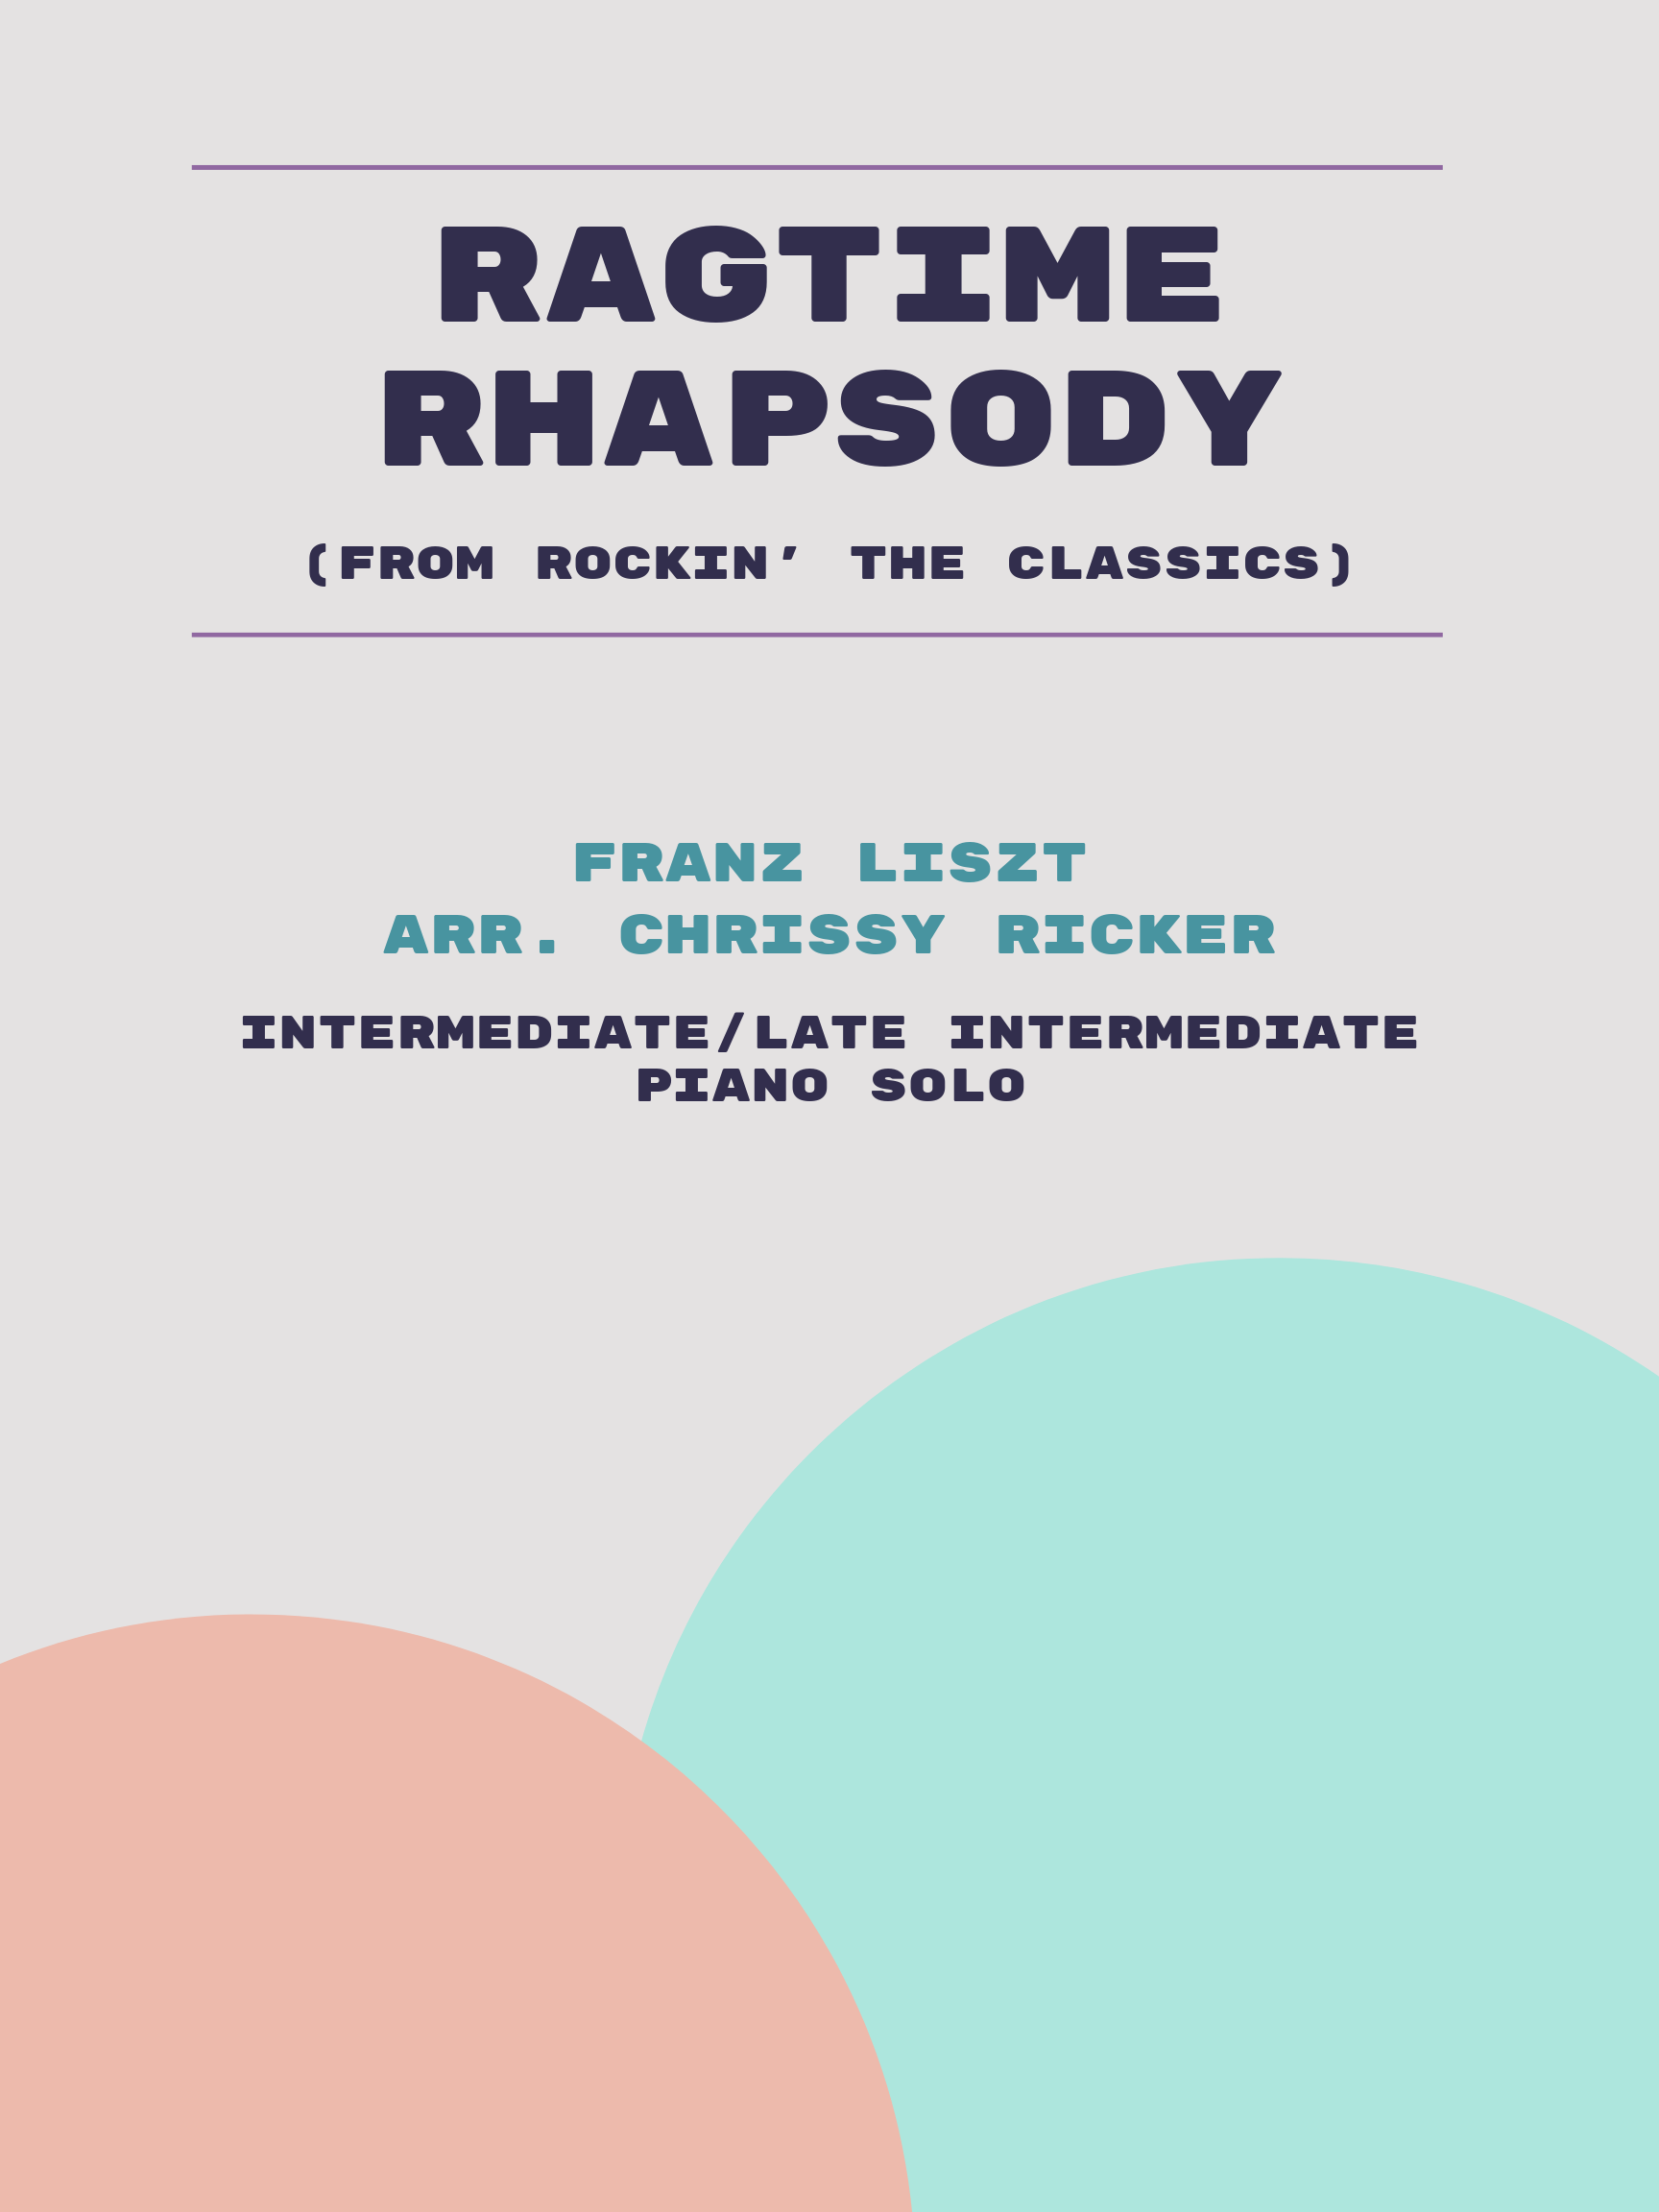 Ragtime Rhapsody by Franz Liszt